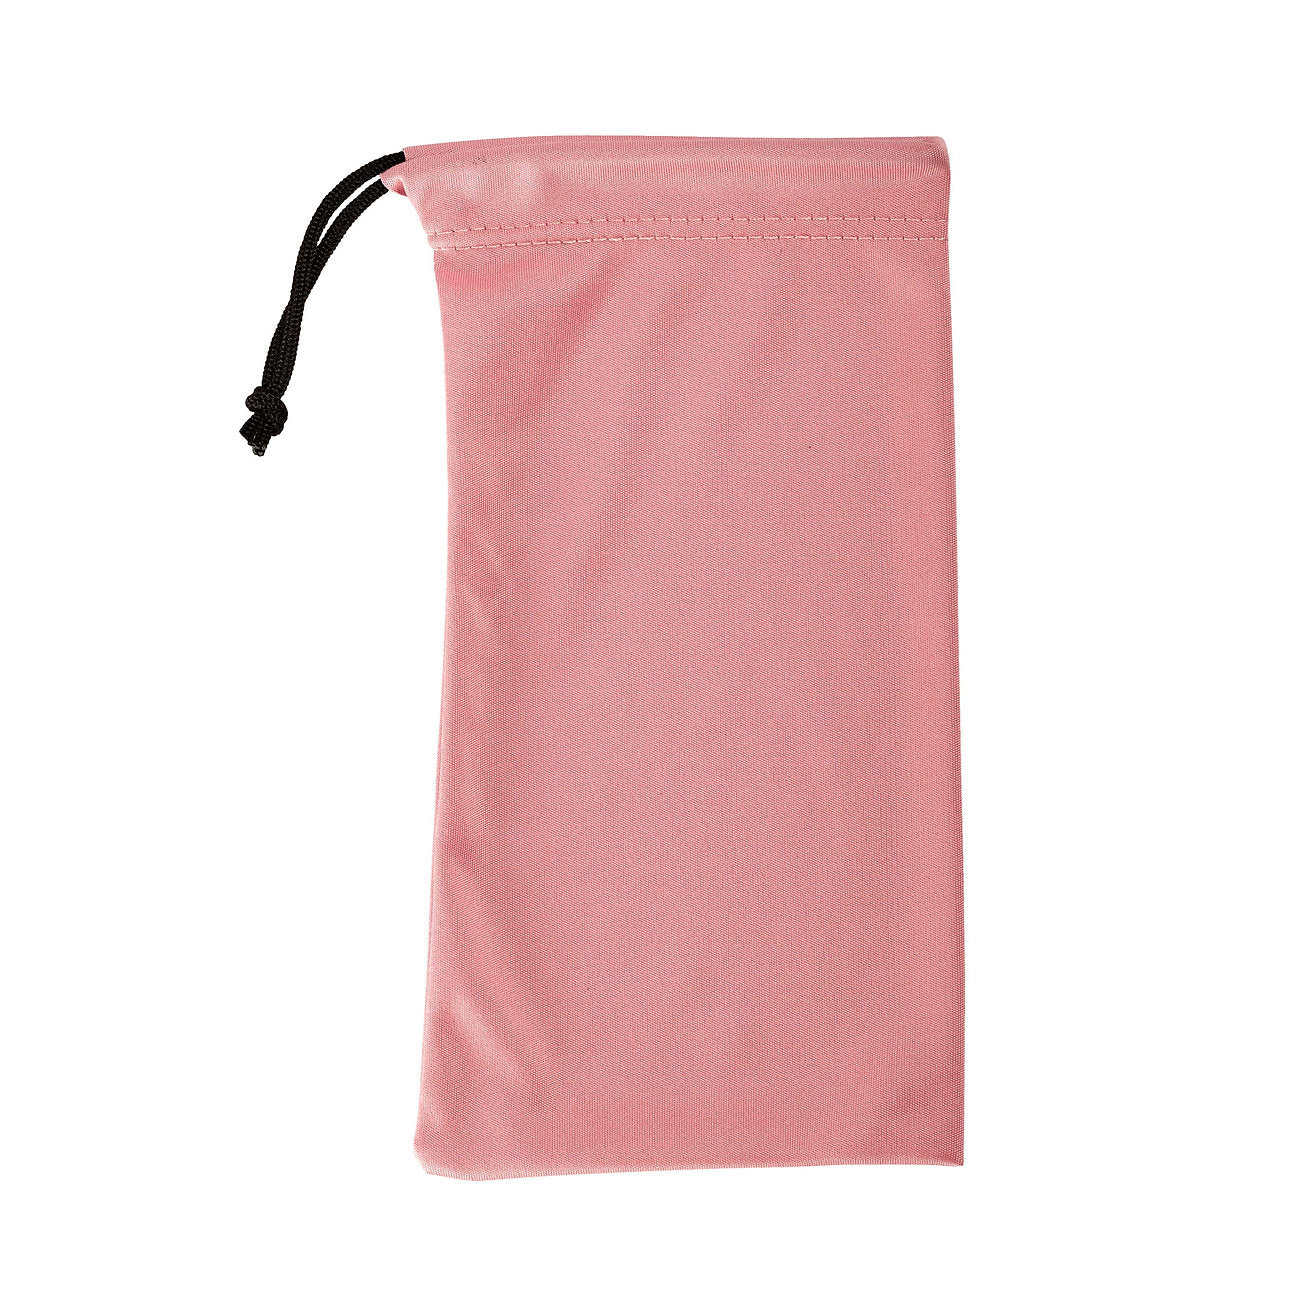 Pink drawstring bag for glasses